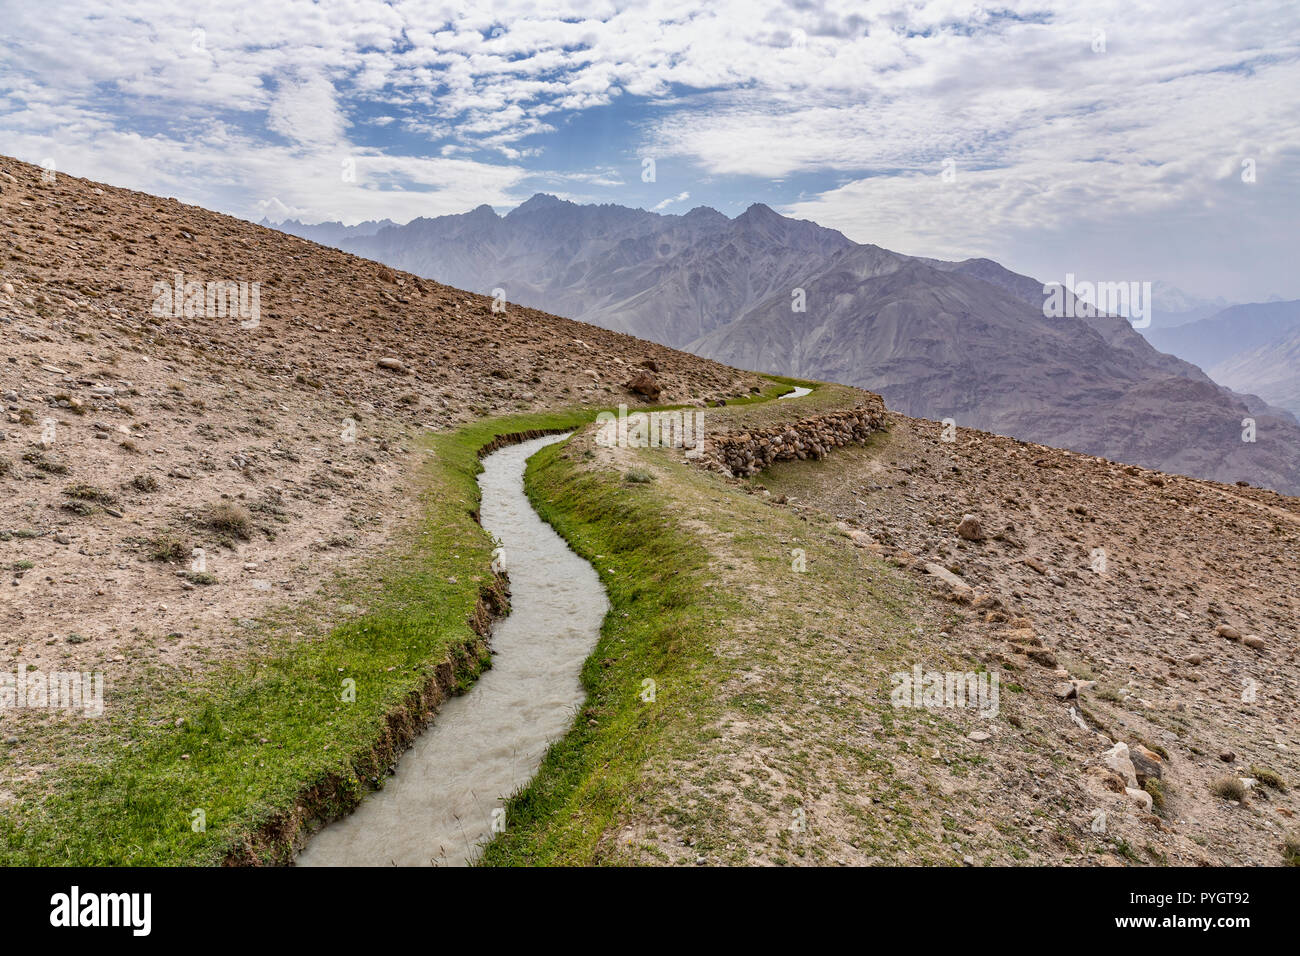 Typical traditional Central Asian water canal, or water dyke carrying water to villages, Langar, Tajik Wakhan, Pamir Mountains, Tajikistan Stock Photo